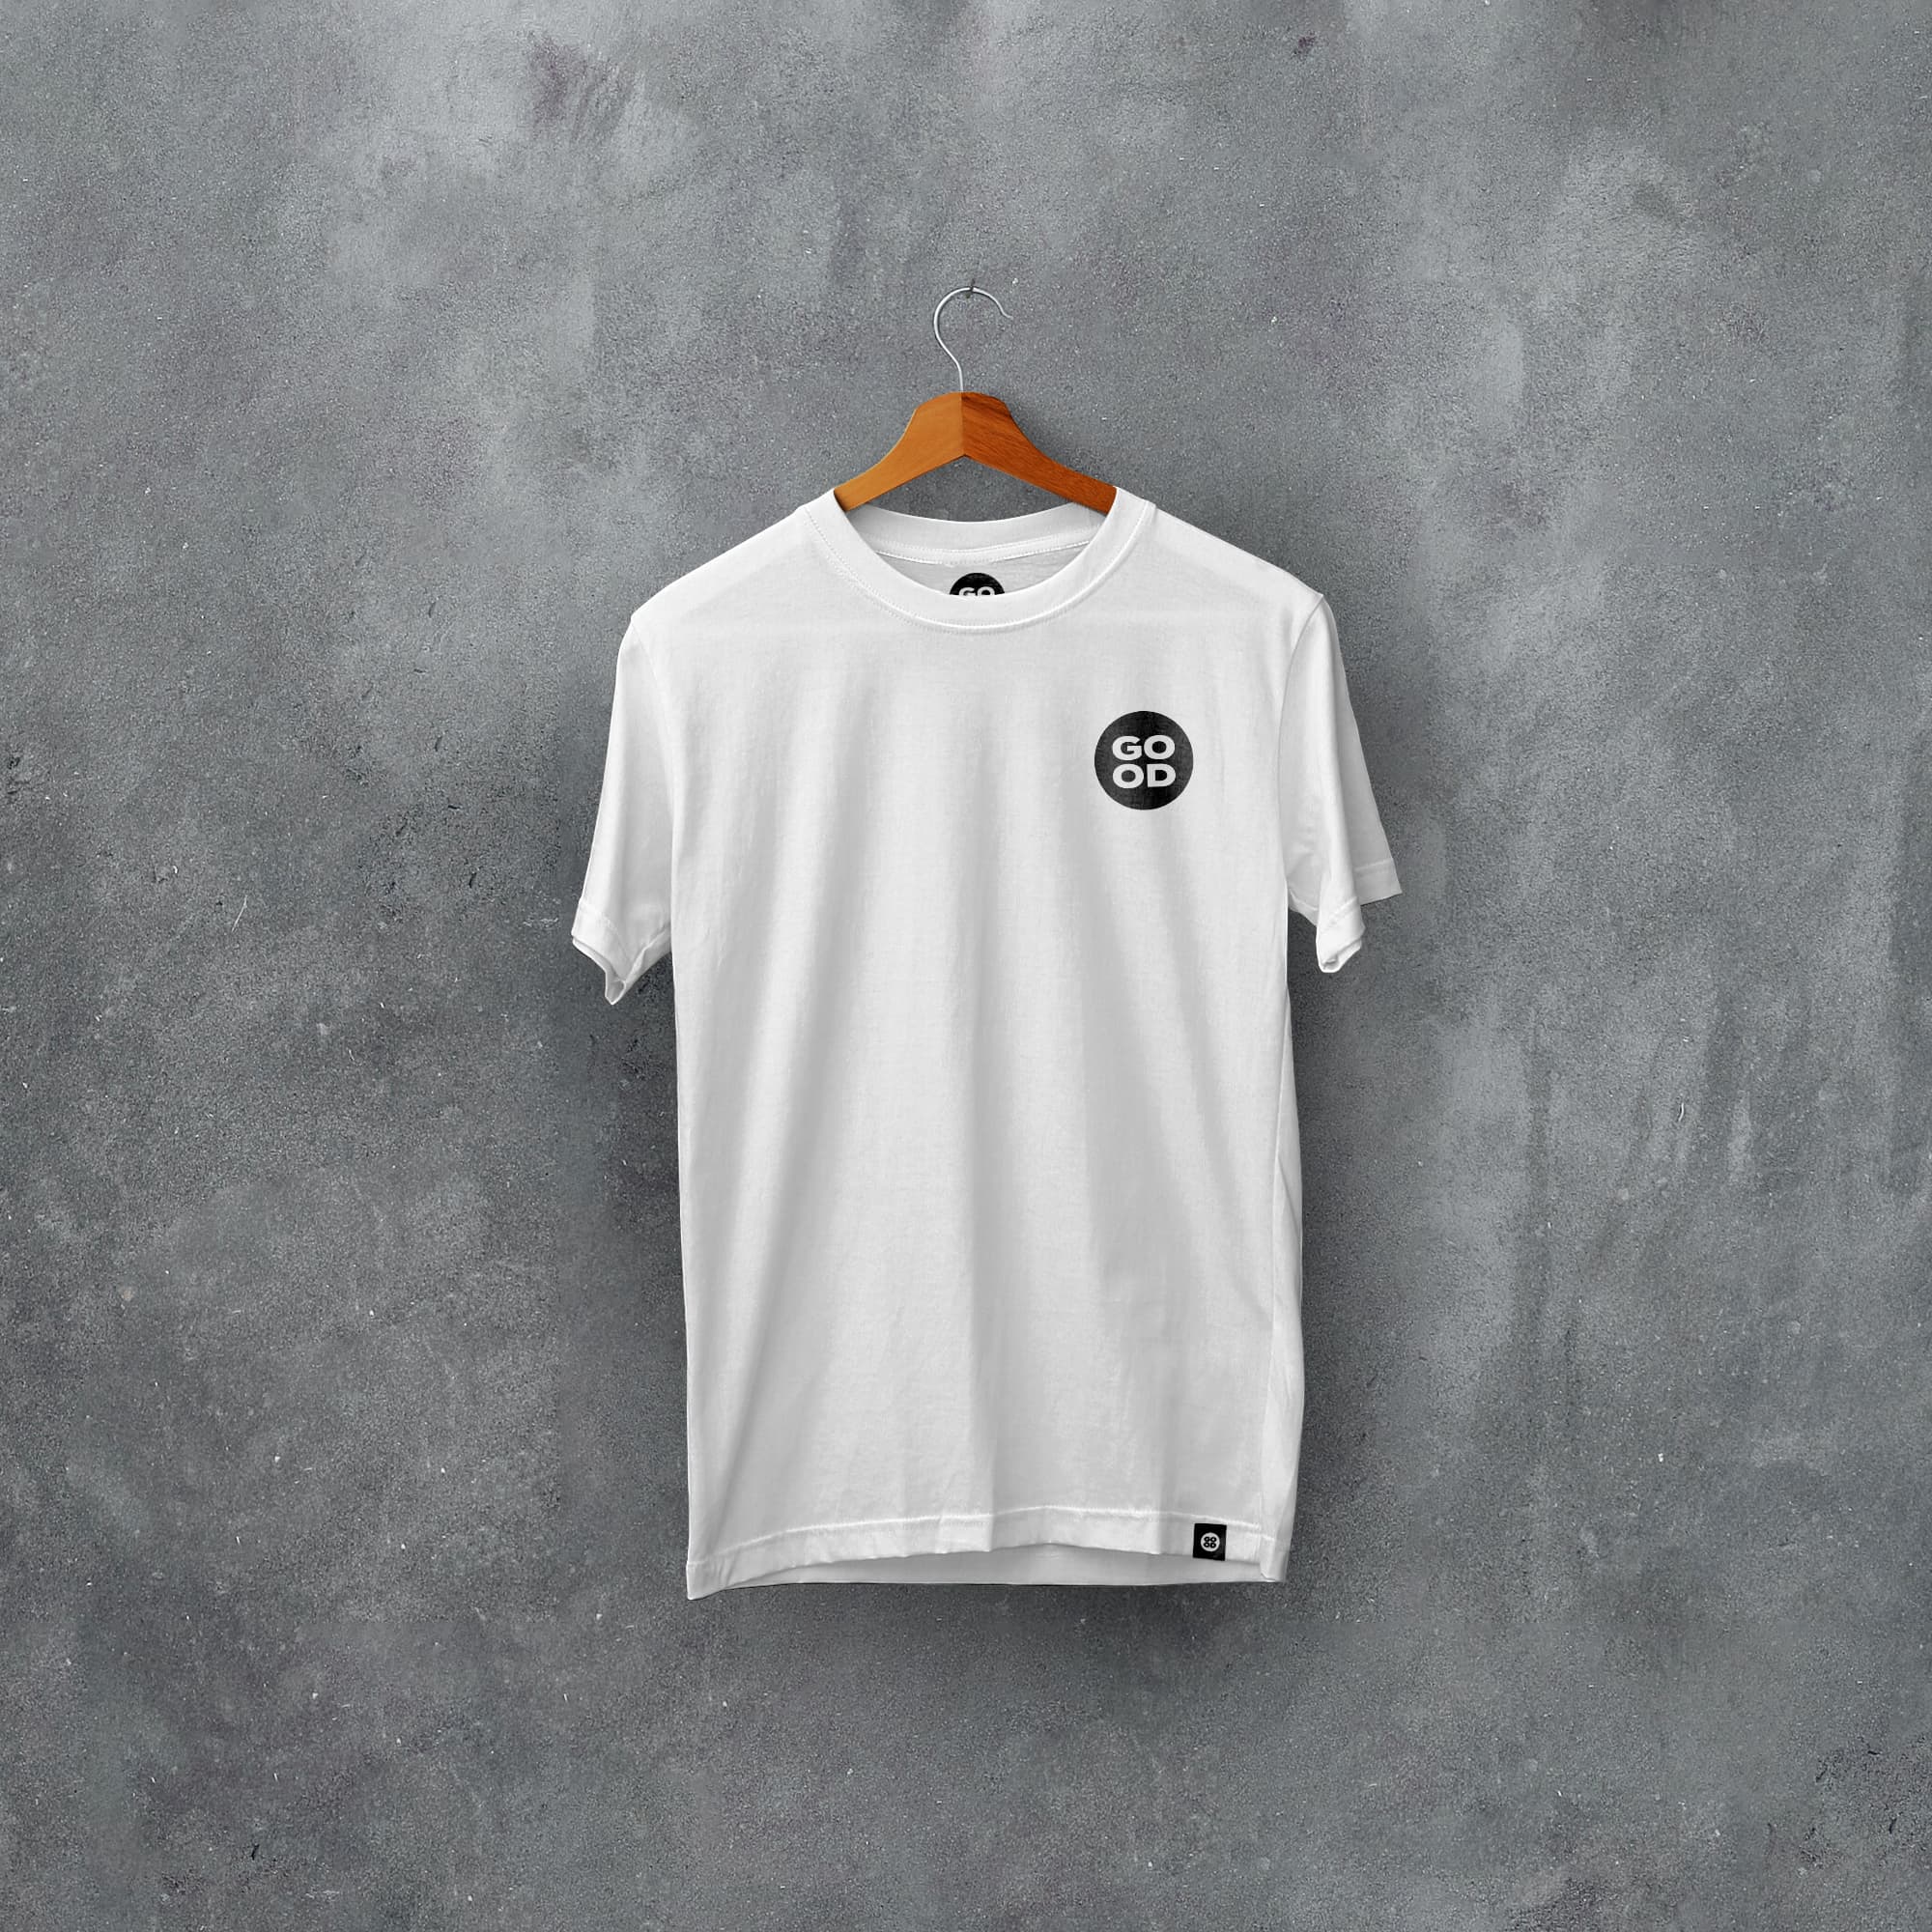 Forfar Classic Kits Football T-Shirt